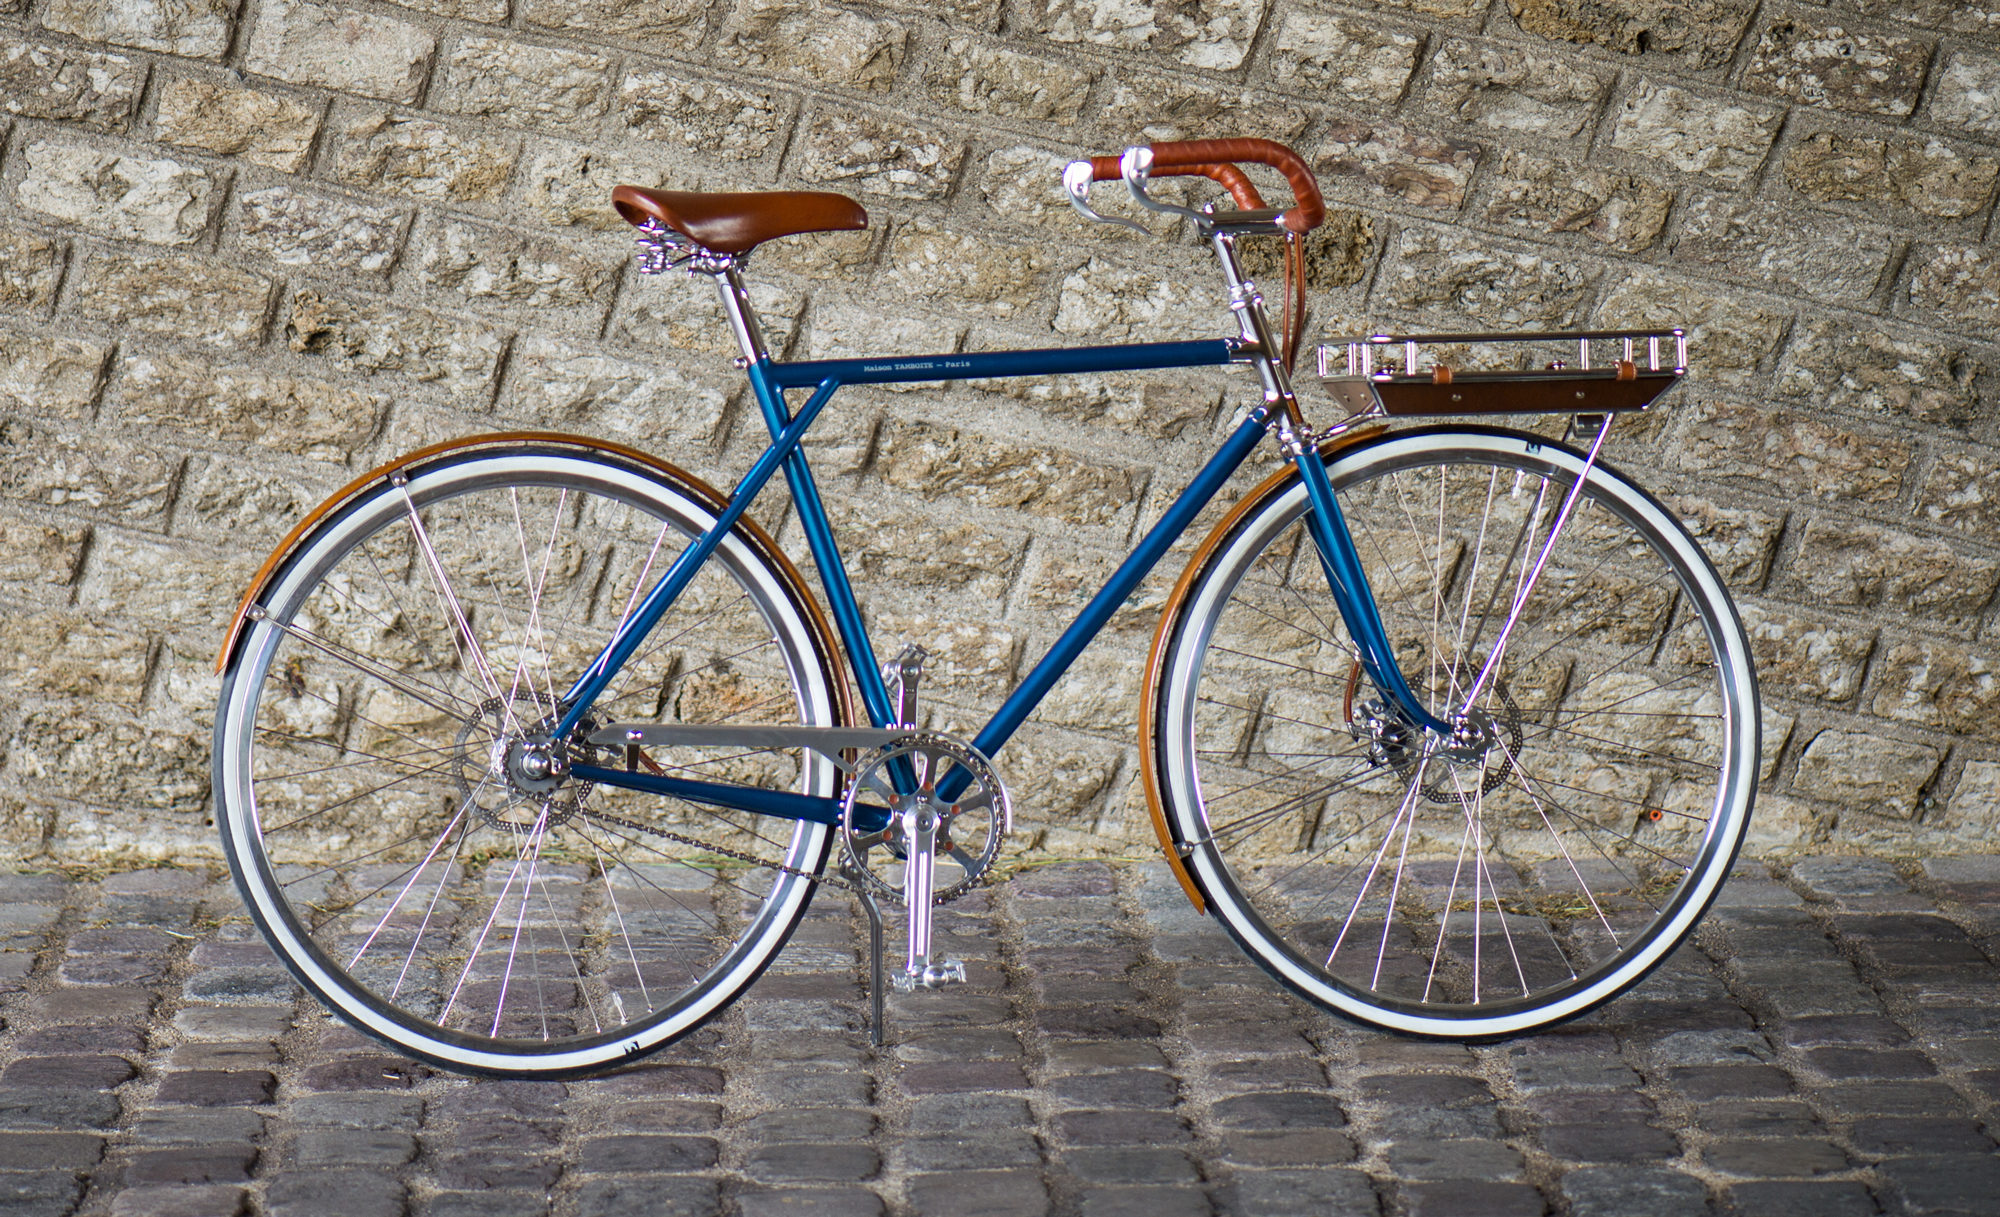 A Bespoke Bicycle by Maison Tamboite Paris